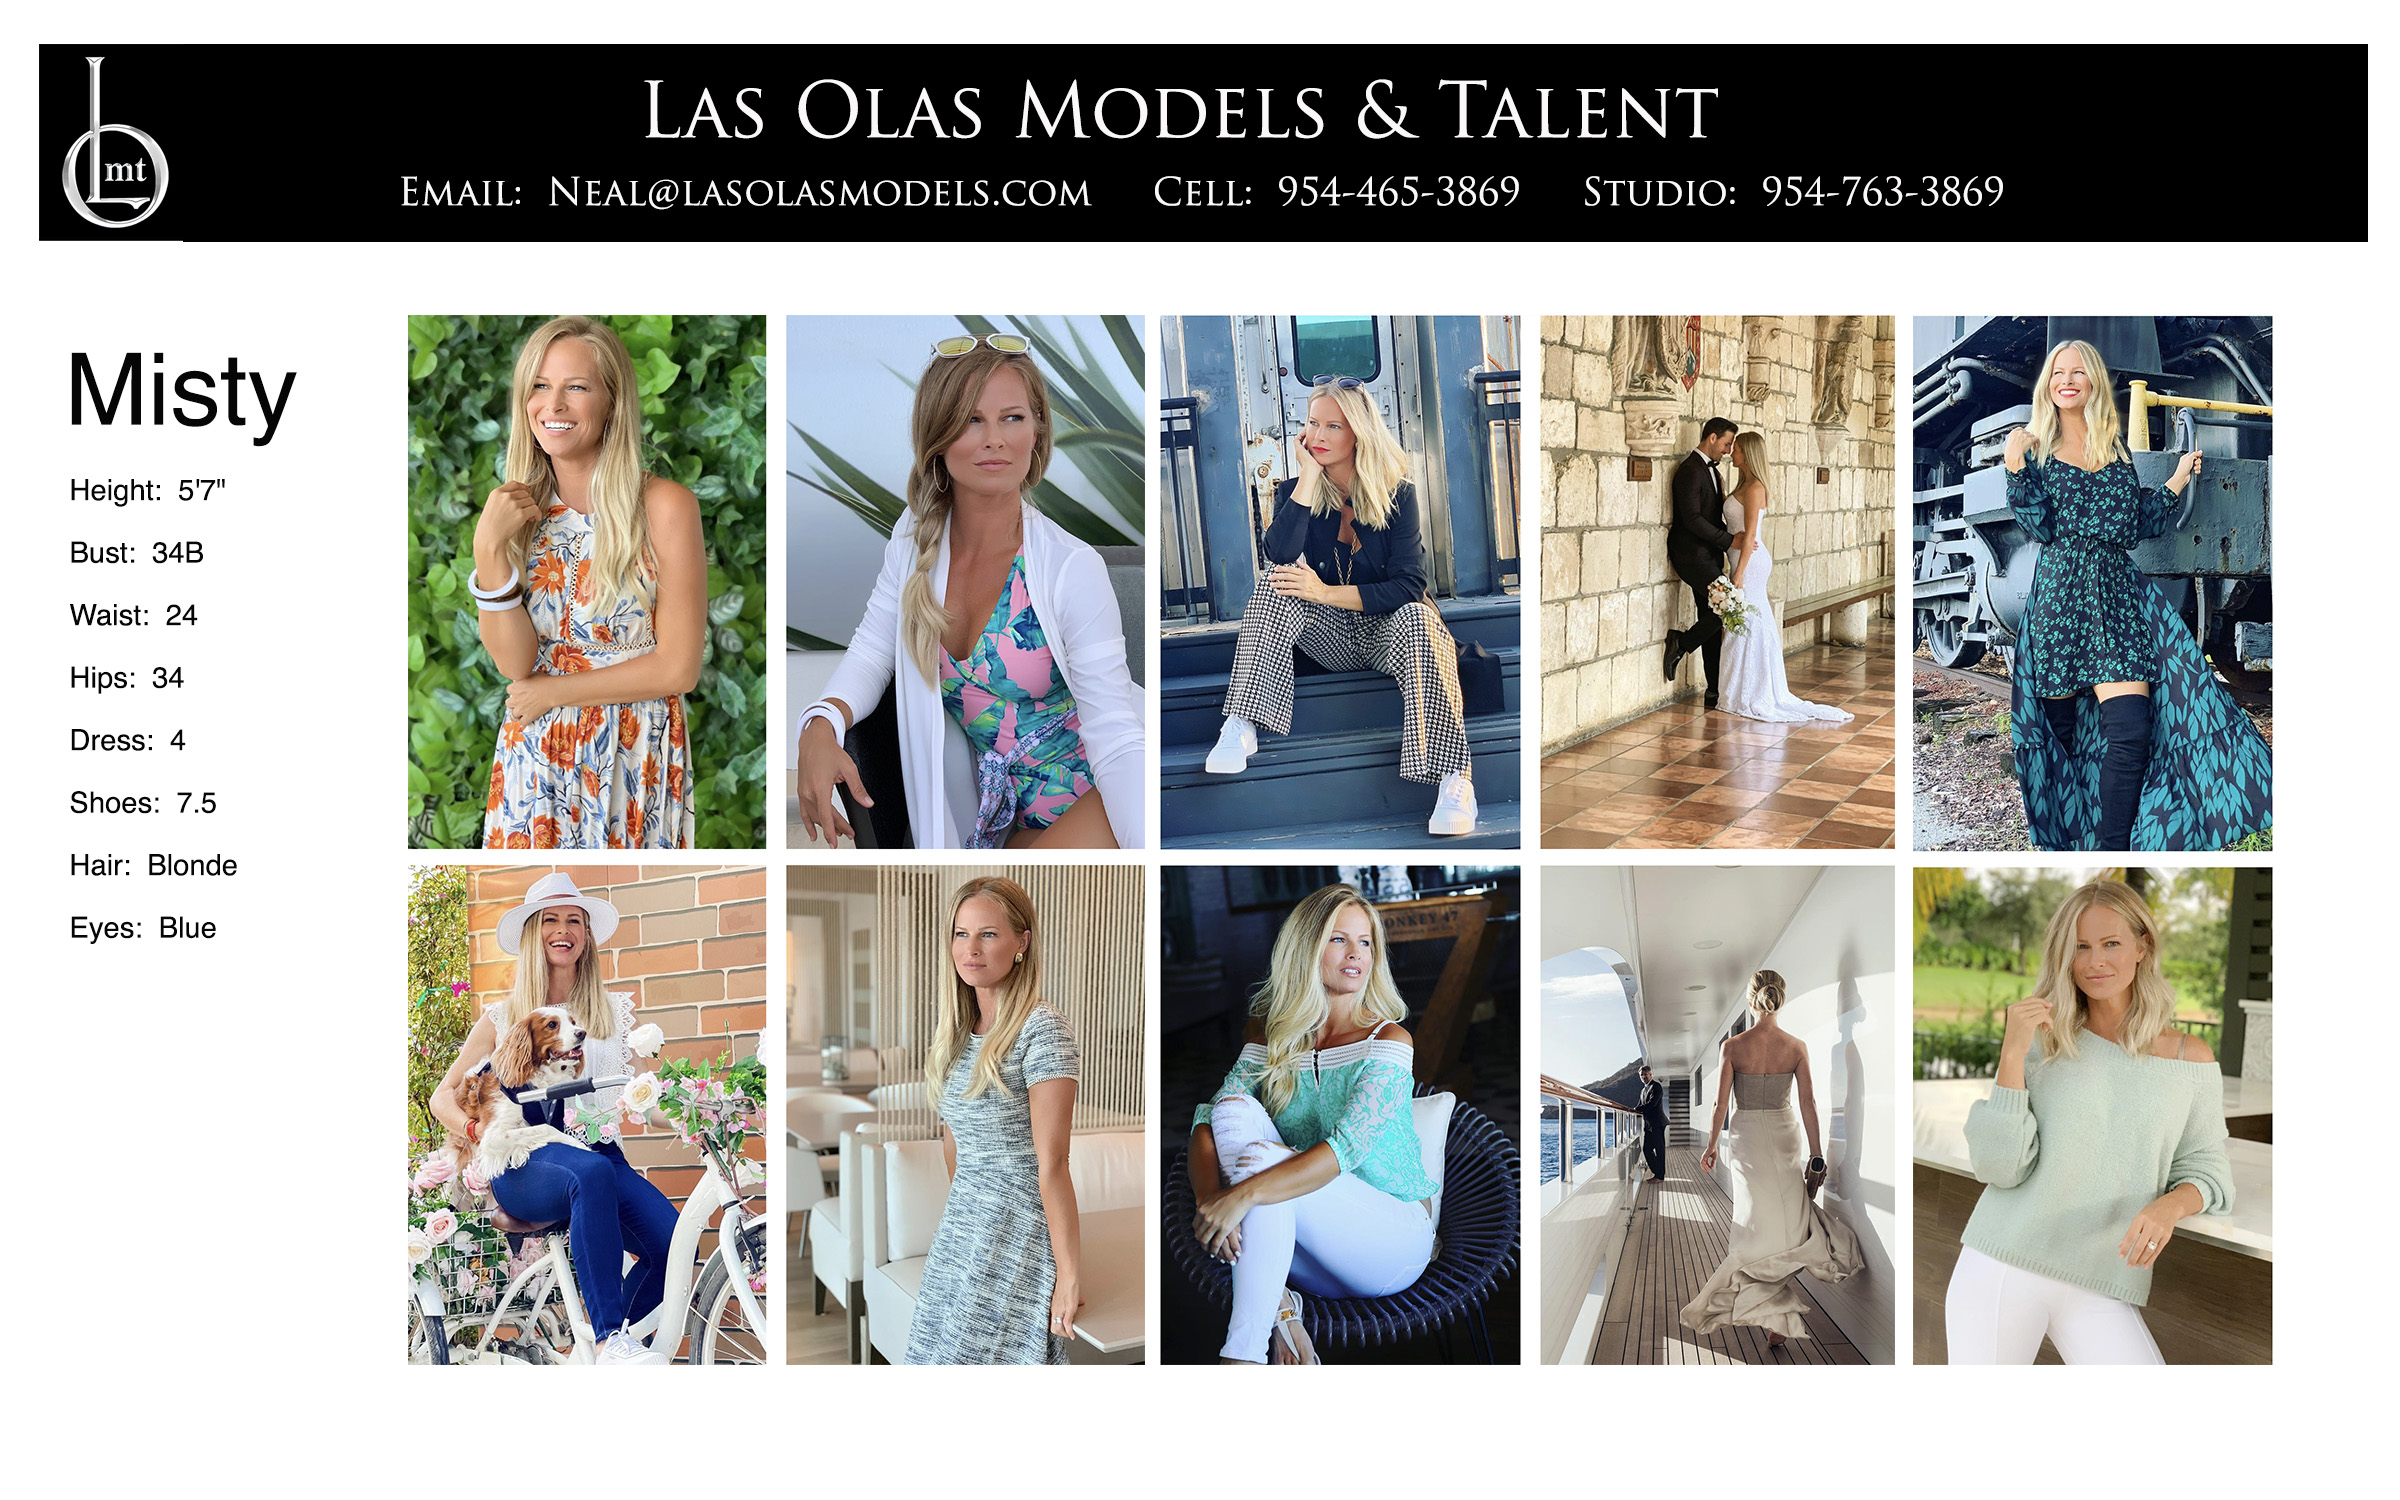 Models Fort Lauderdale Miami South Florida - Print Video Commercial Catalog - Las Olas Models & Talent - Misty Comp